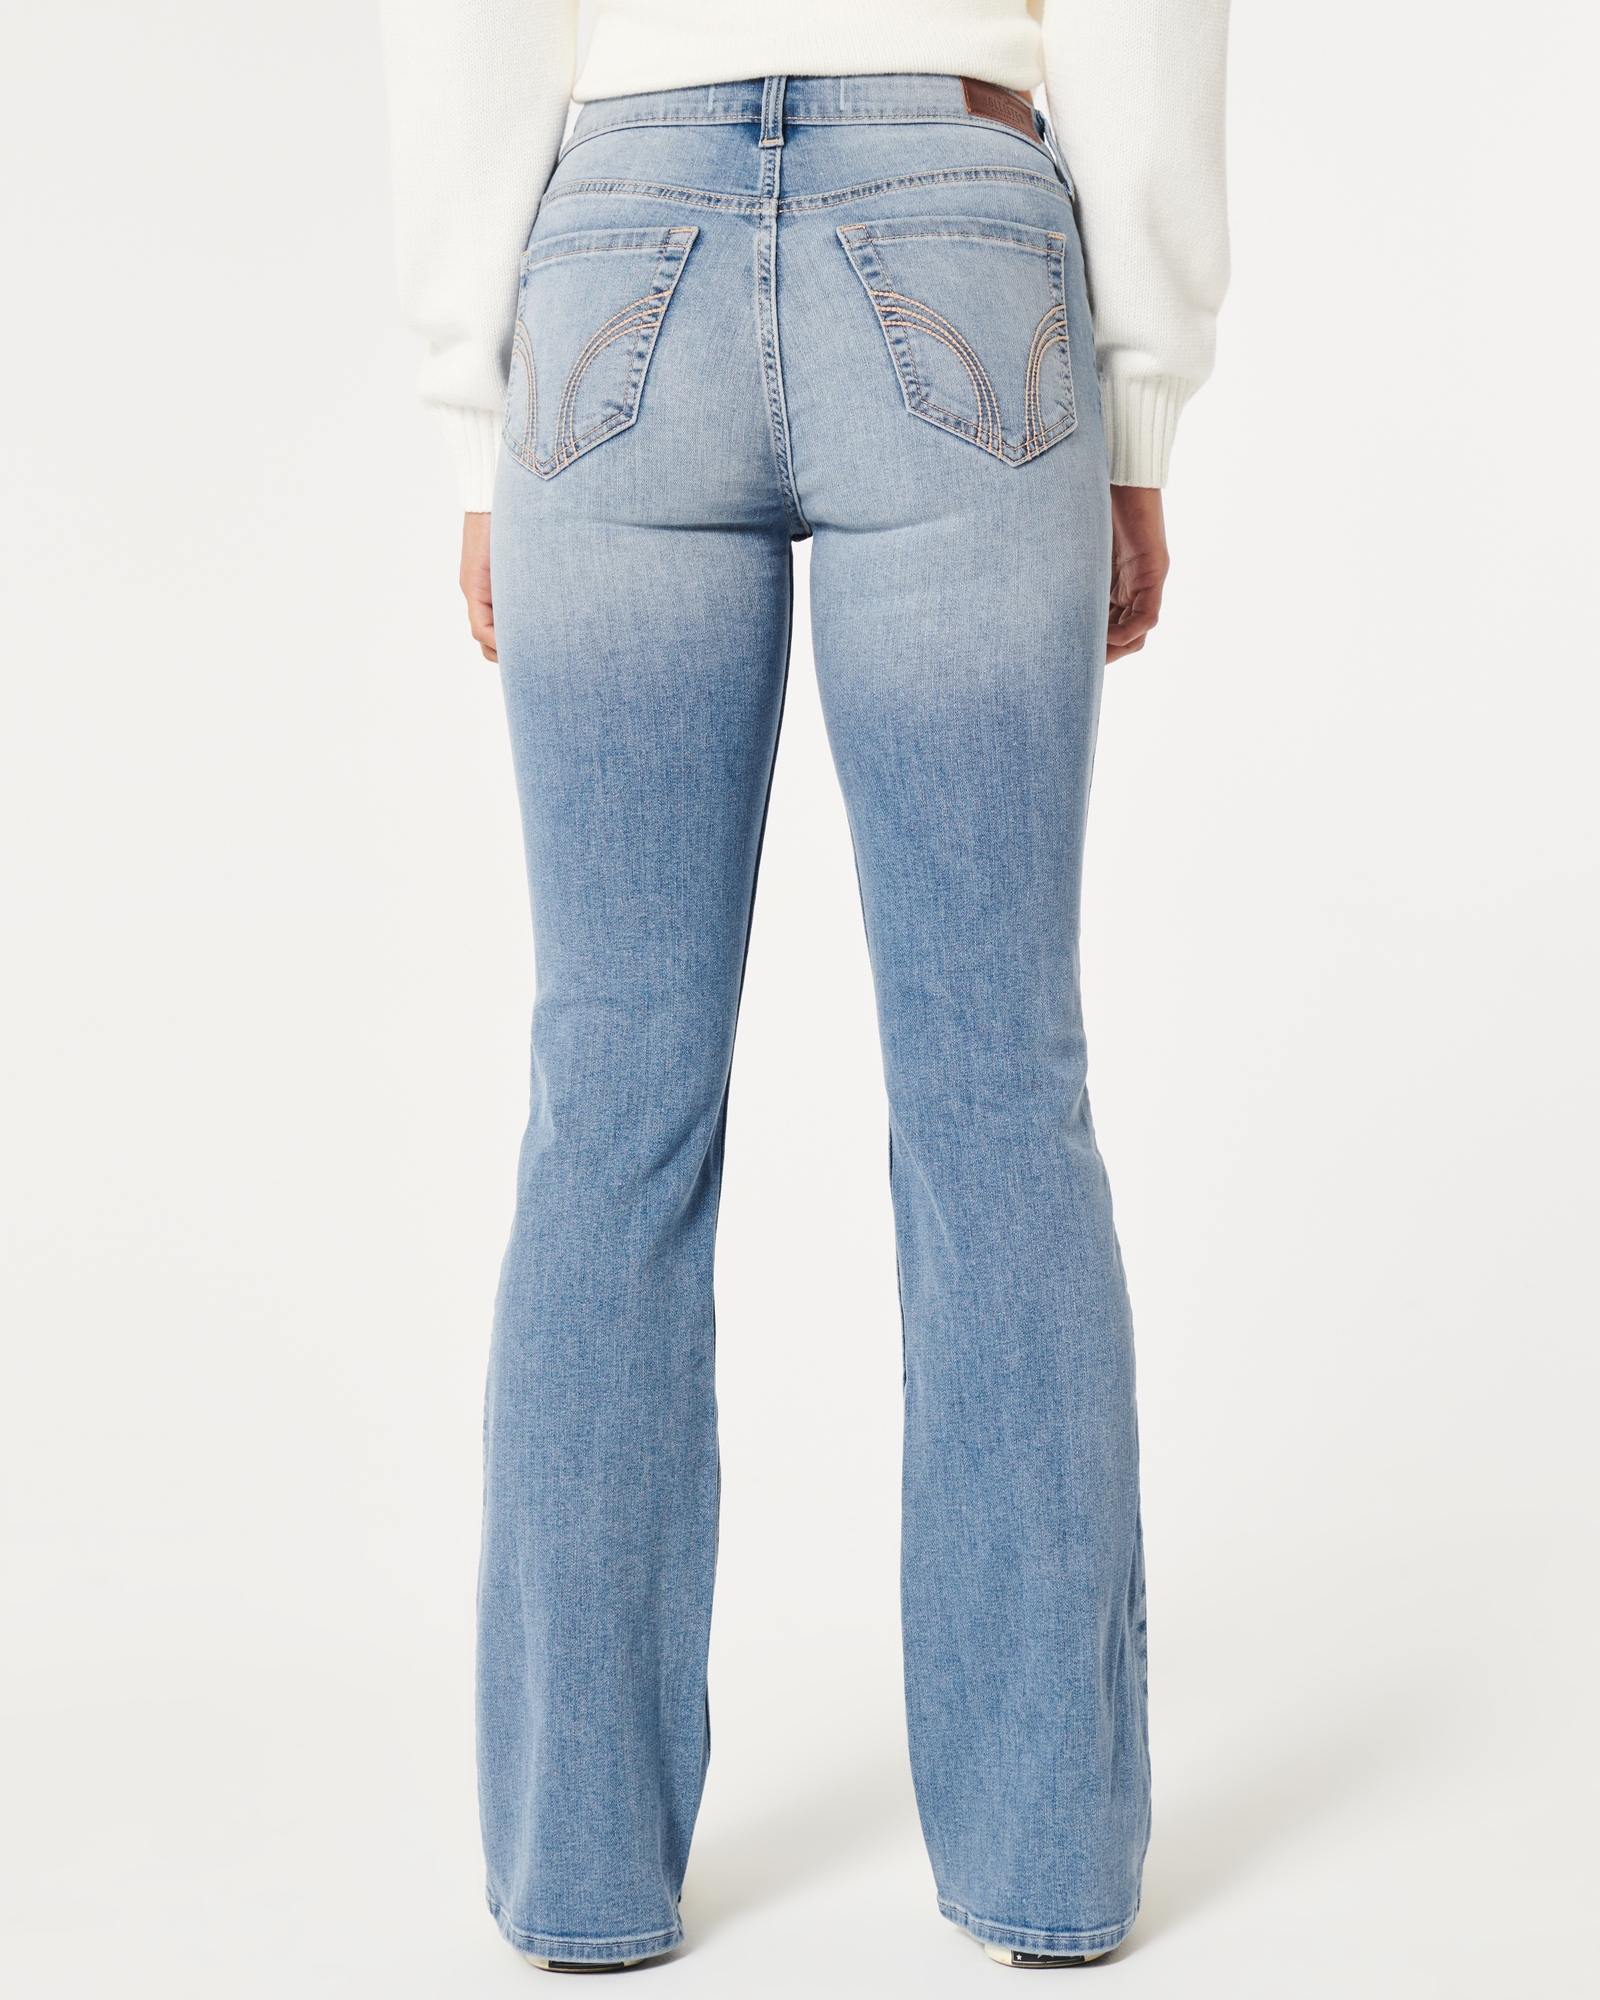 Hollister medium wash boot cut jeans with slight - Depop